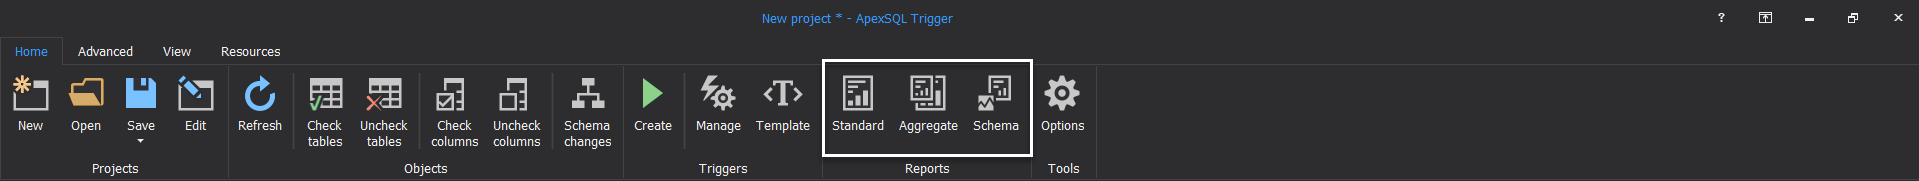 ApexSQL Trigger - Reports